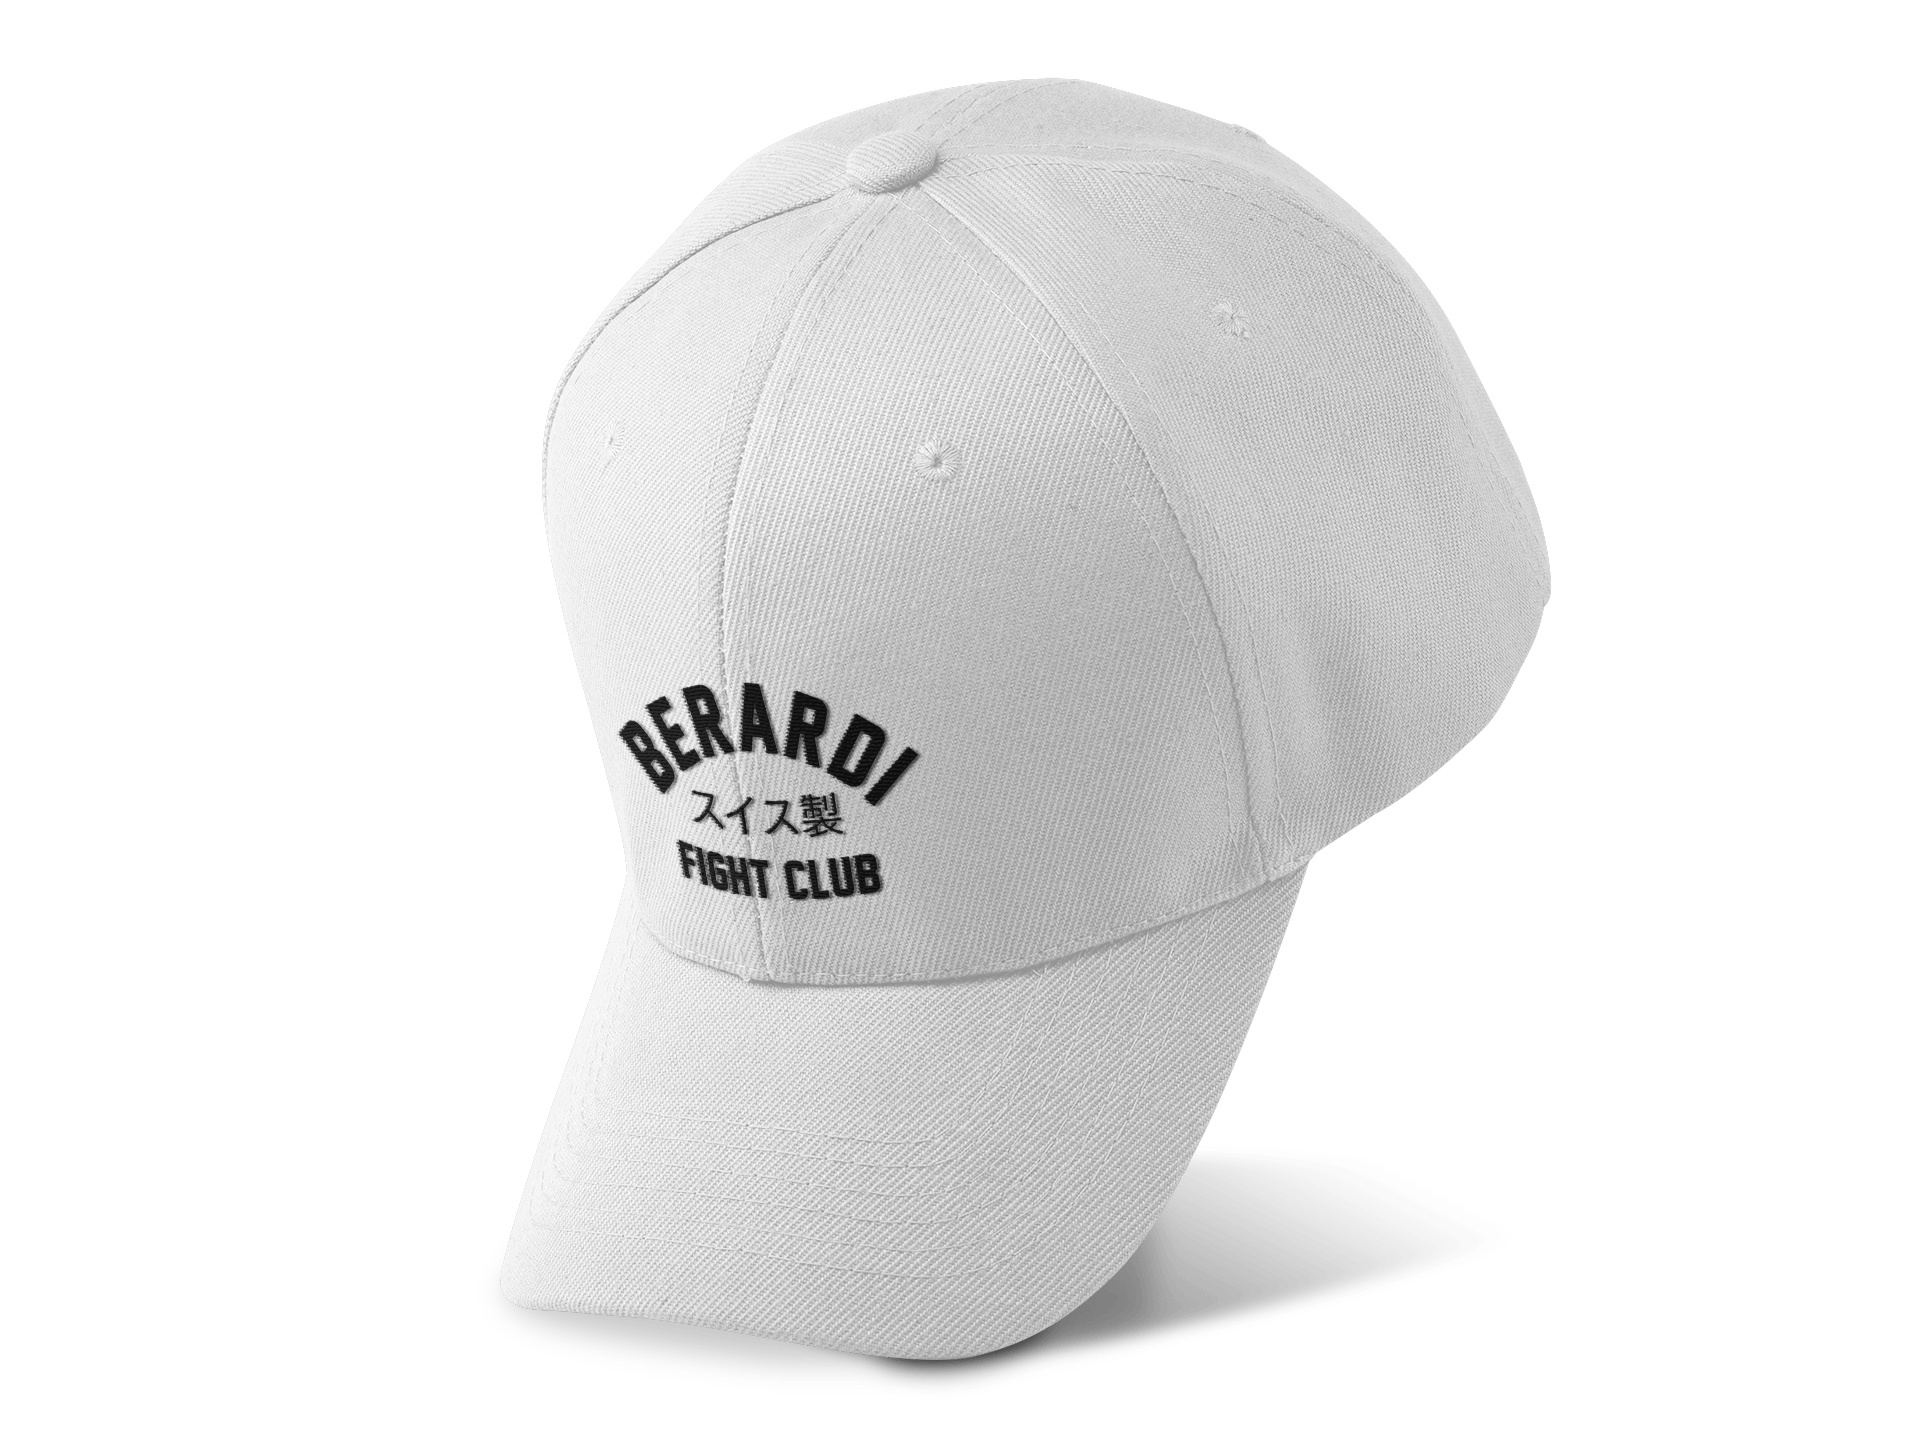 Berardi Fight Club Dad Hat